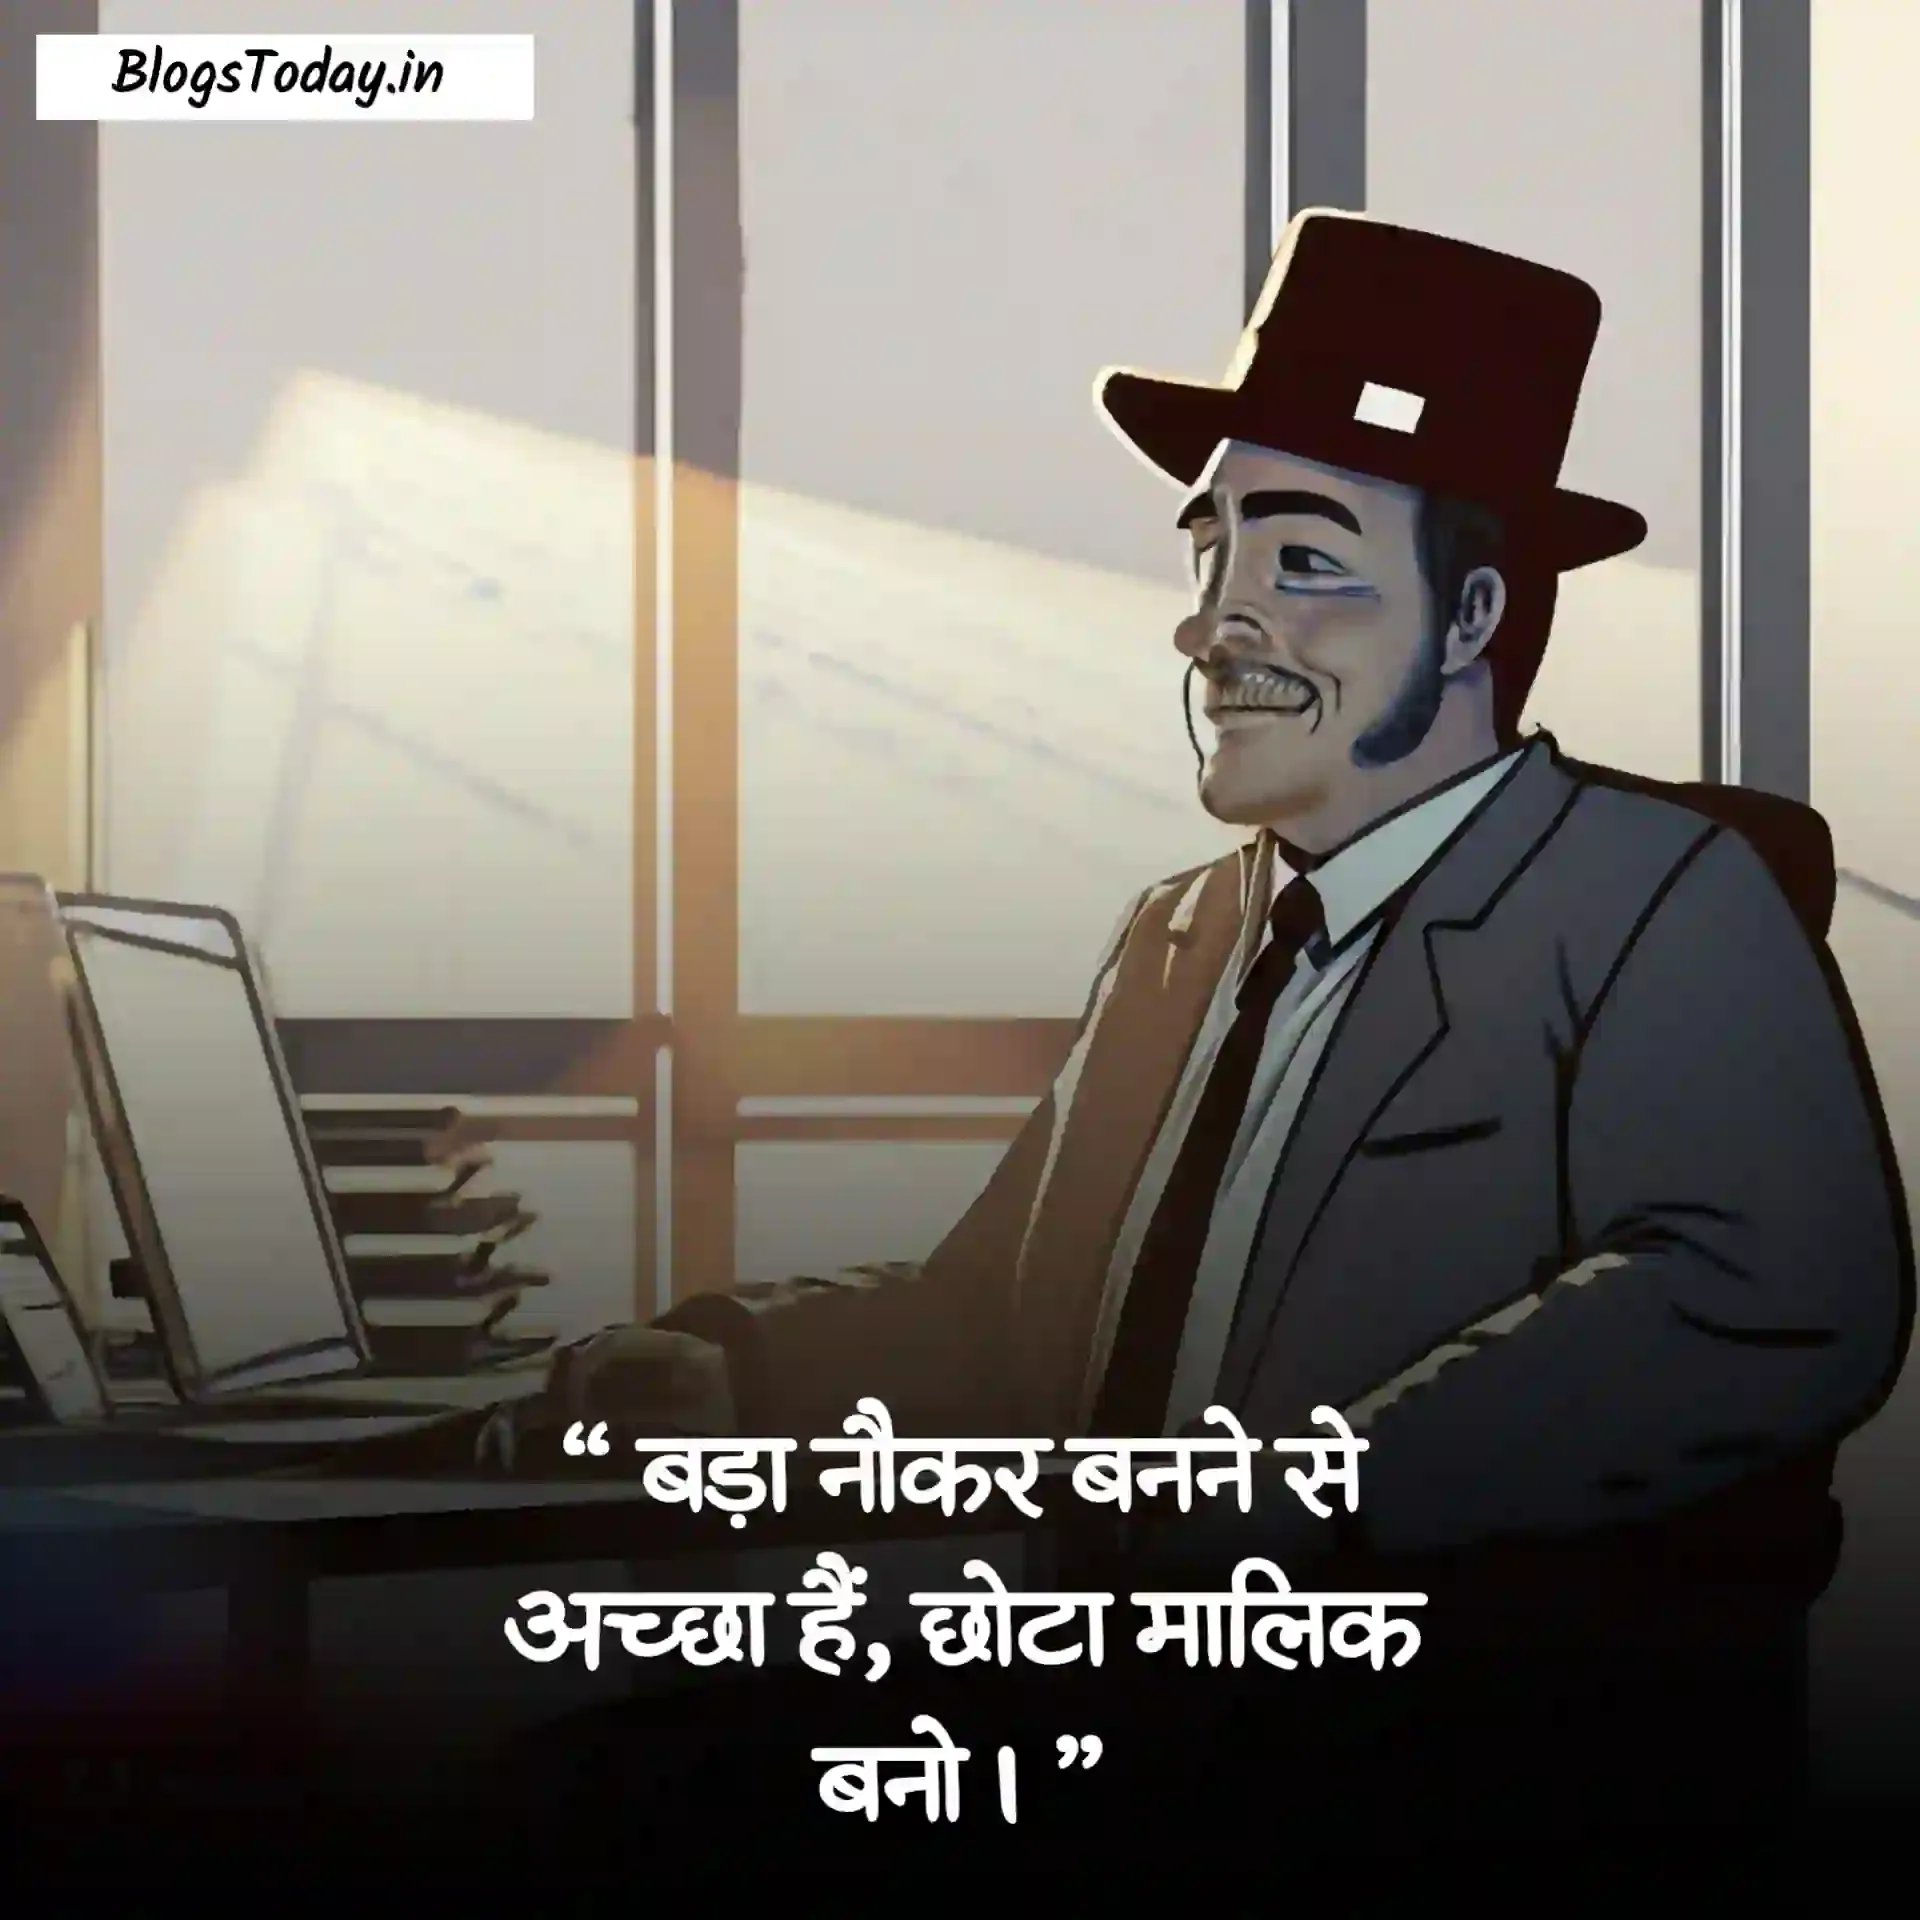 good morning quotes in hindi image 22